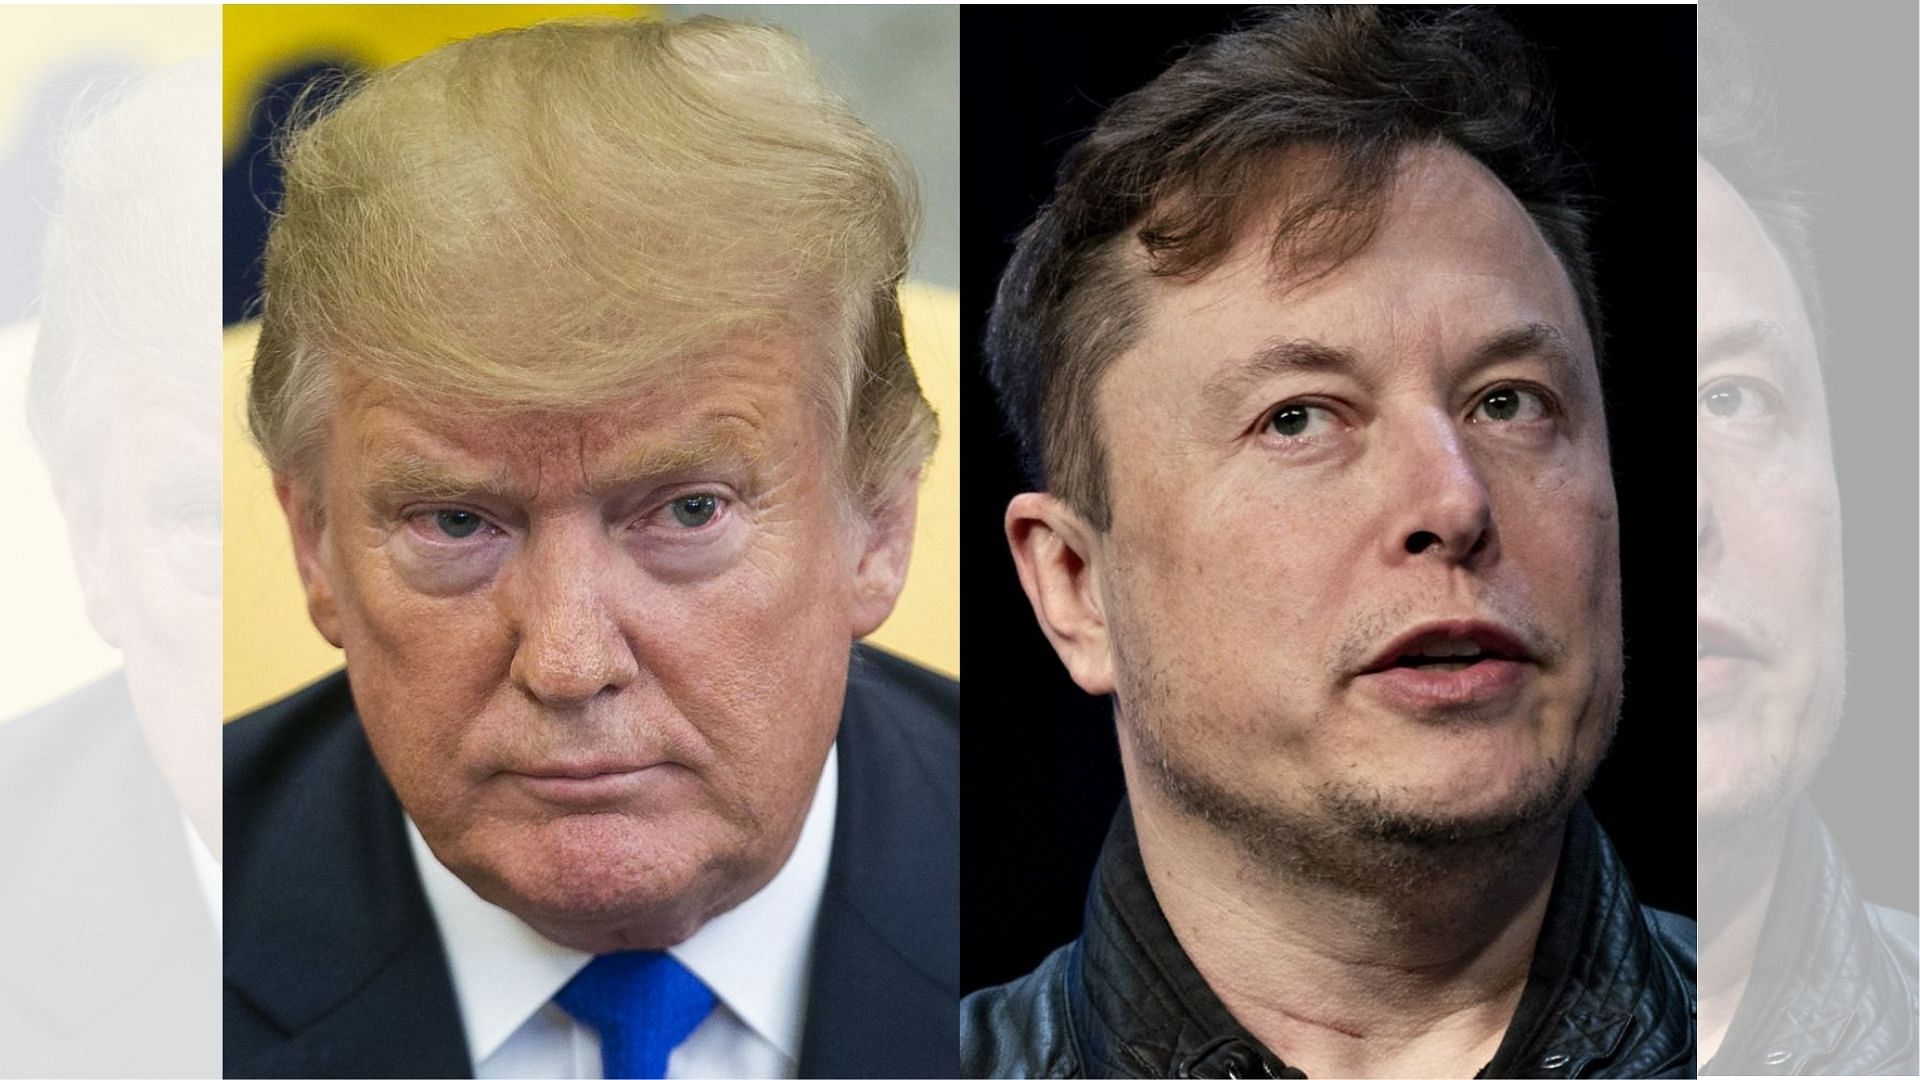 Donald Trump (L) and Elon Musk